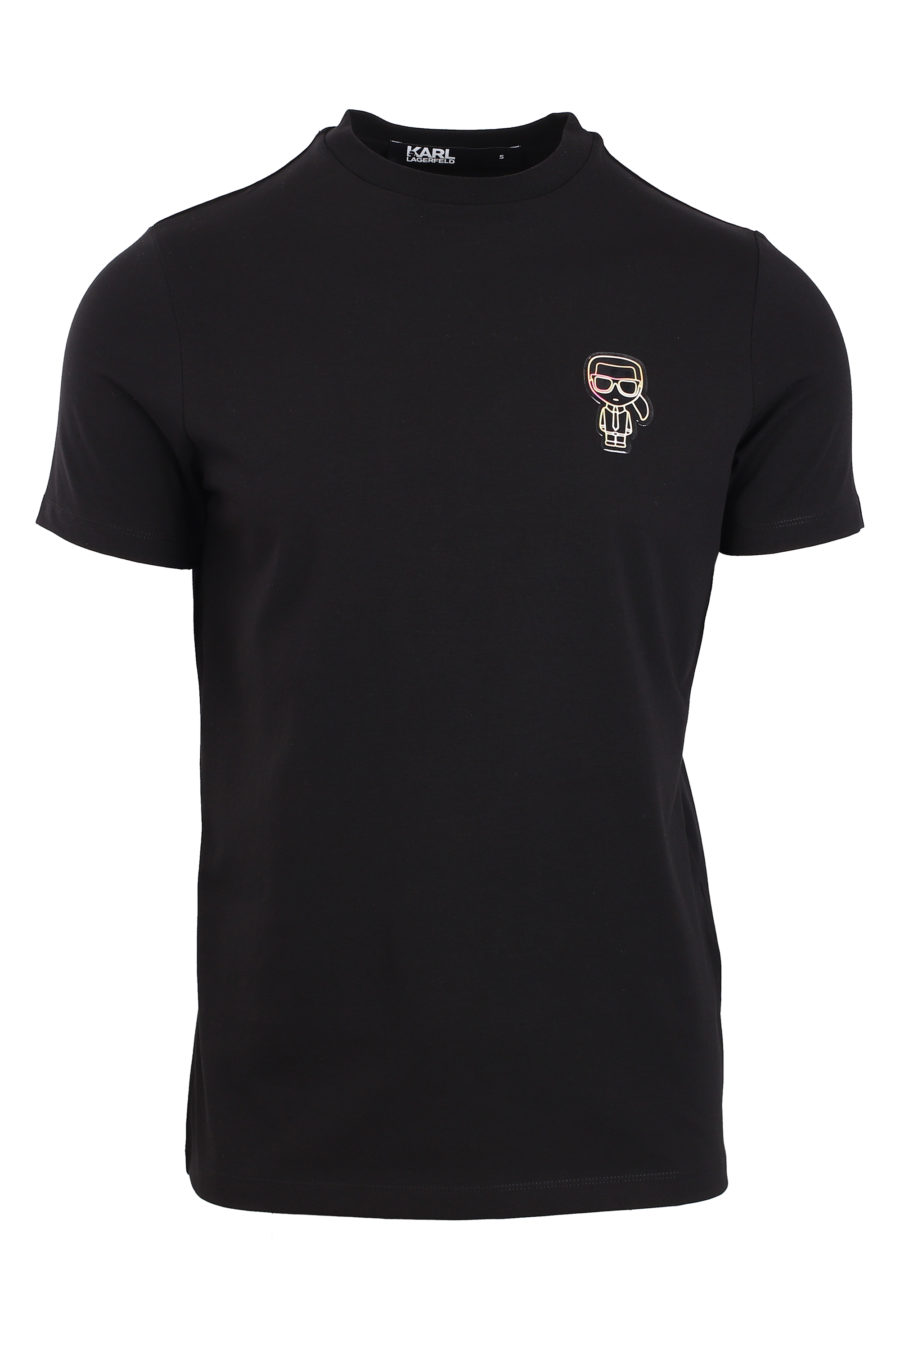 Camiseta negra con logo en silueta tornasol pequeño - IMG 0893